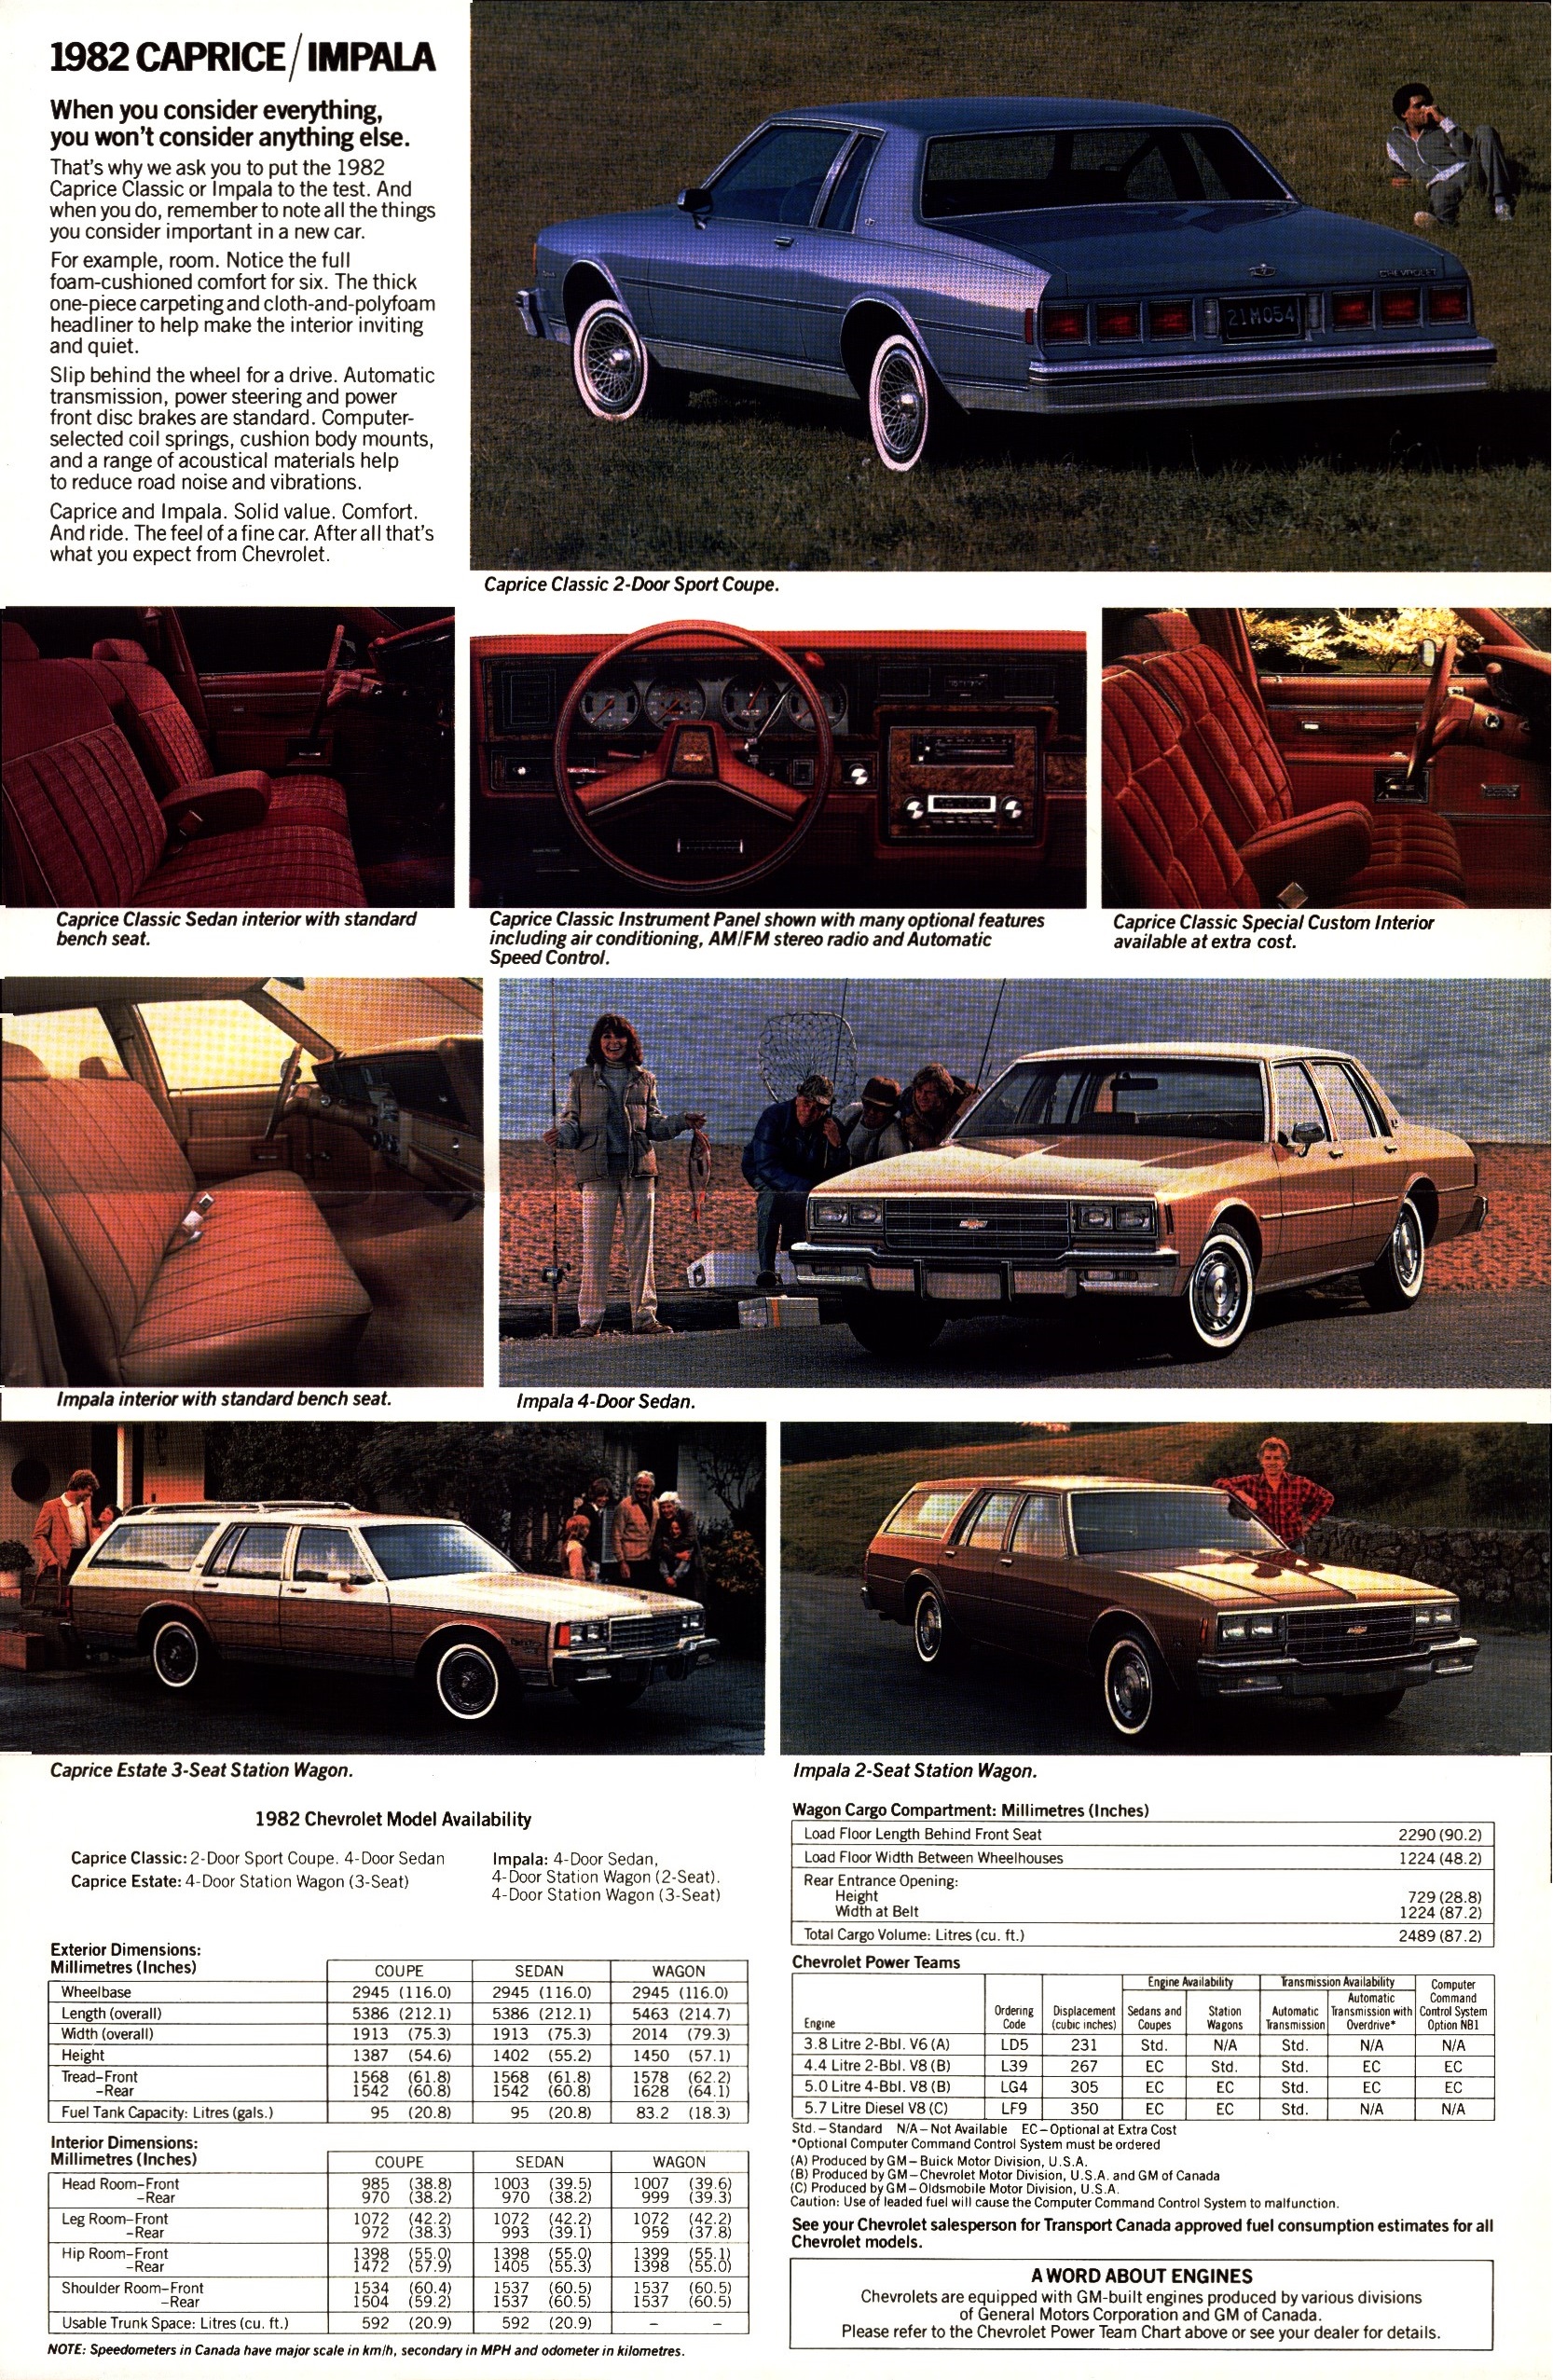 1982 Chevrolet Caprice Classic & Impala Brochure (Cdn) 02-03